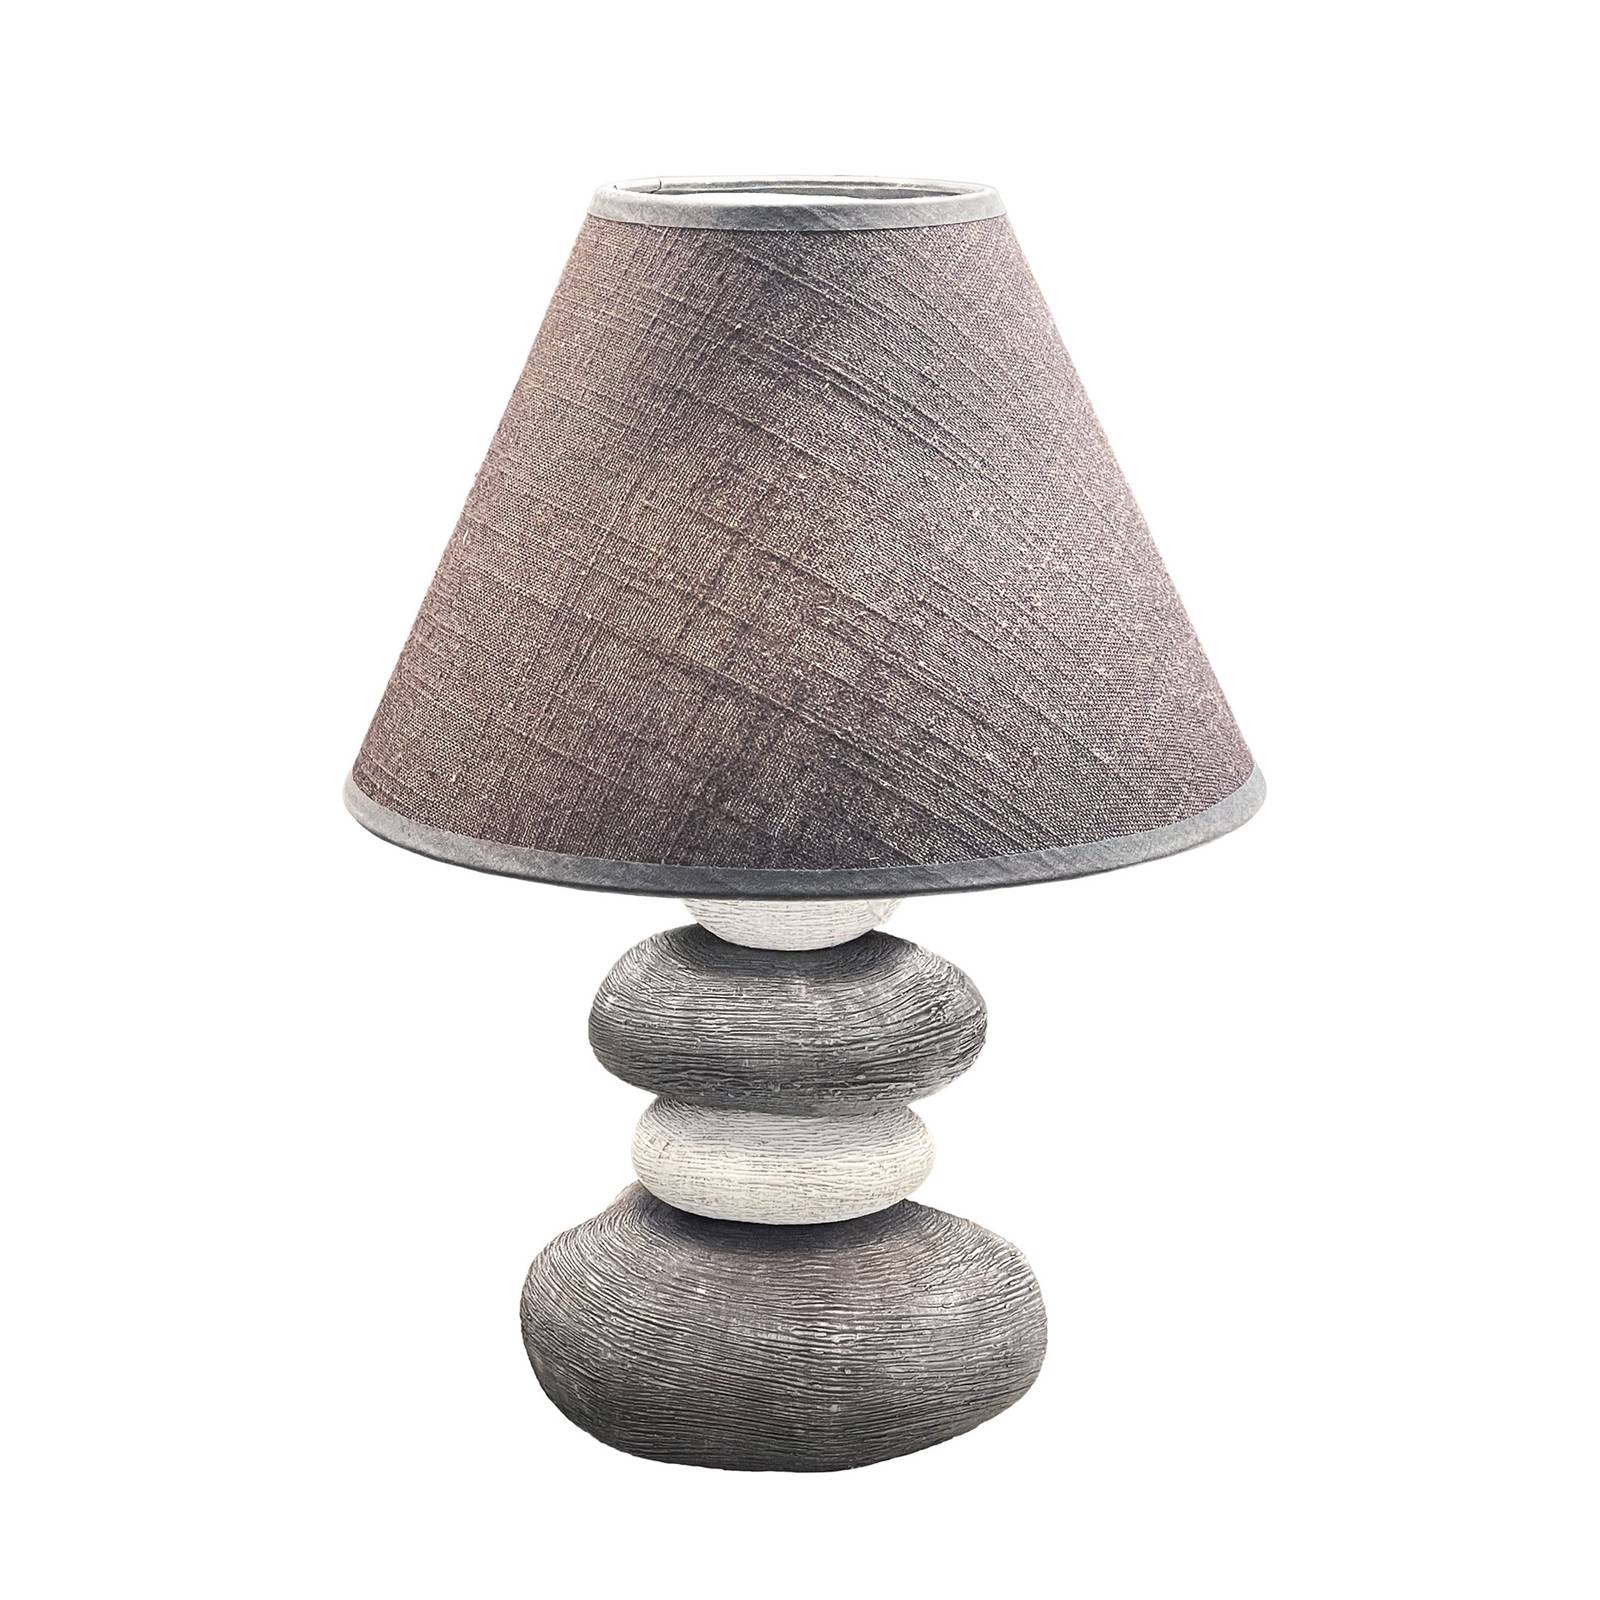 Image of Lampe à poser Bella, 33,5 cm, grise/blanche 4052231501647